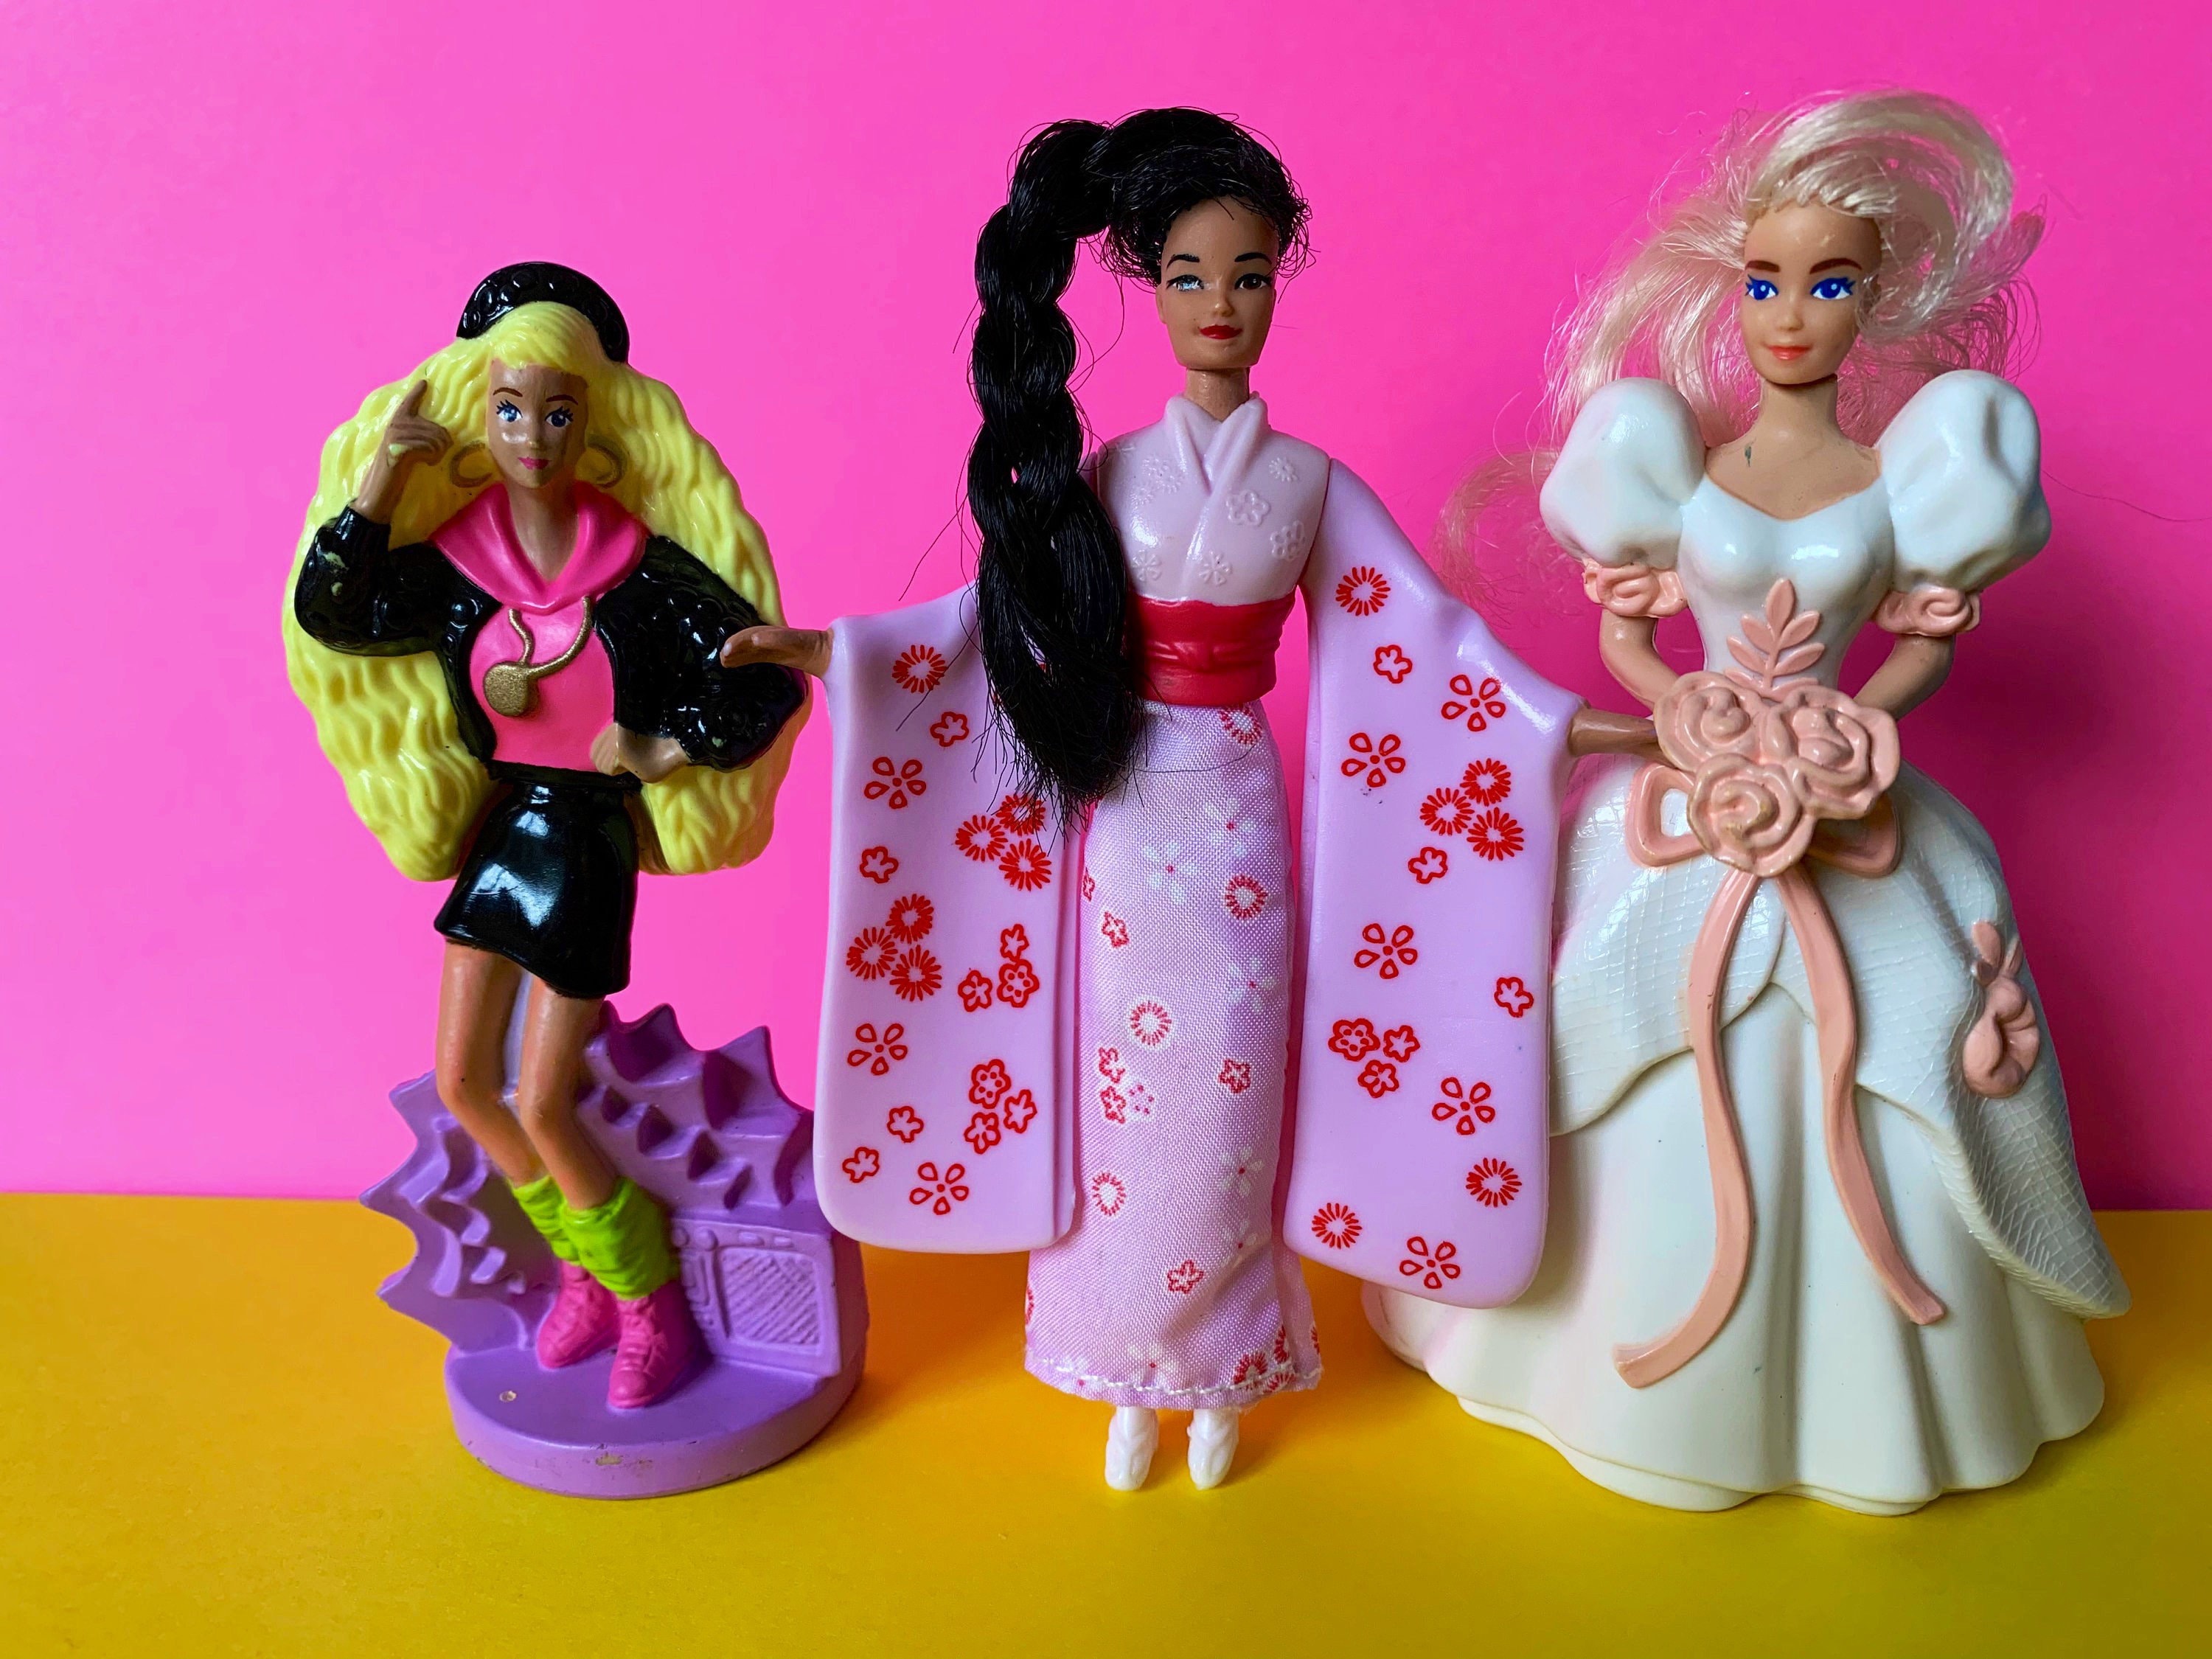 Vintage 1980s Barbie McDonalds ALMOST COMPLETE Original Set 1:6 Scale